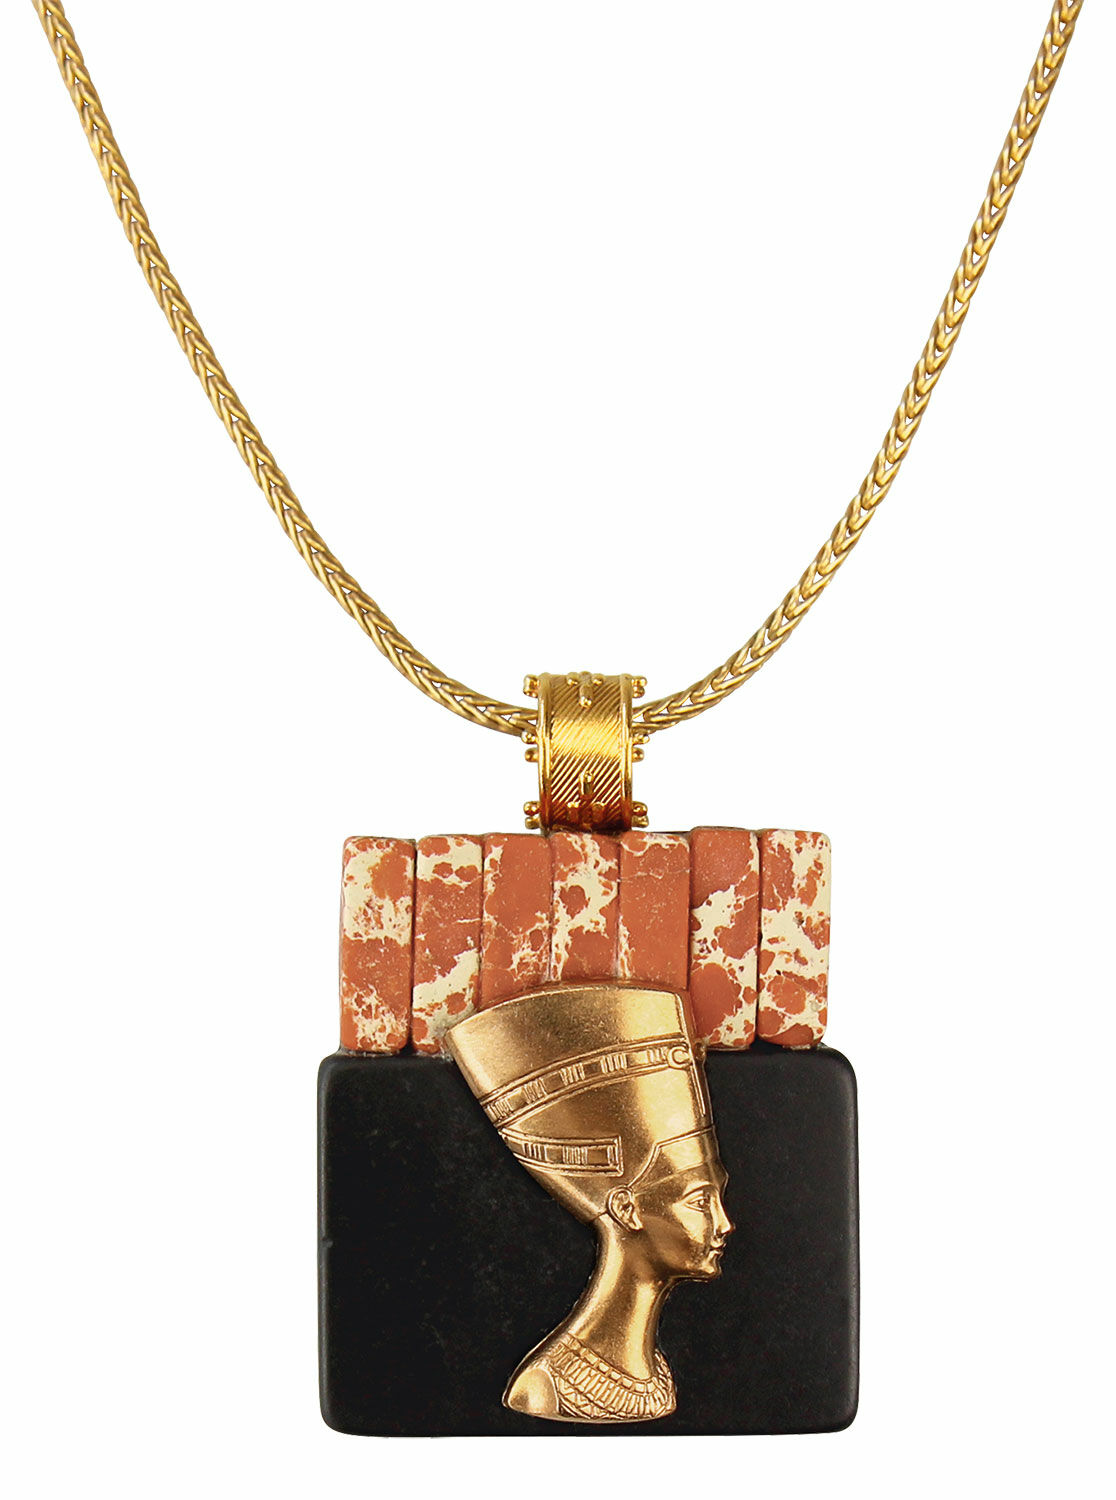 Necklace "Head of Nefertiti" by Petra Waszak